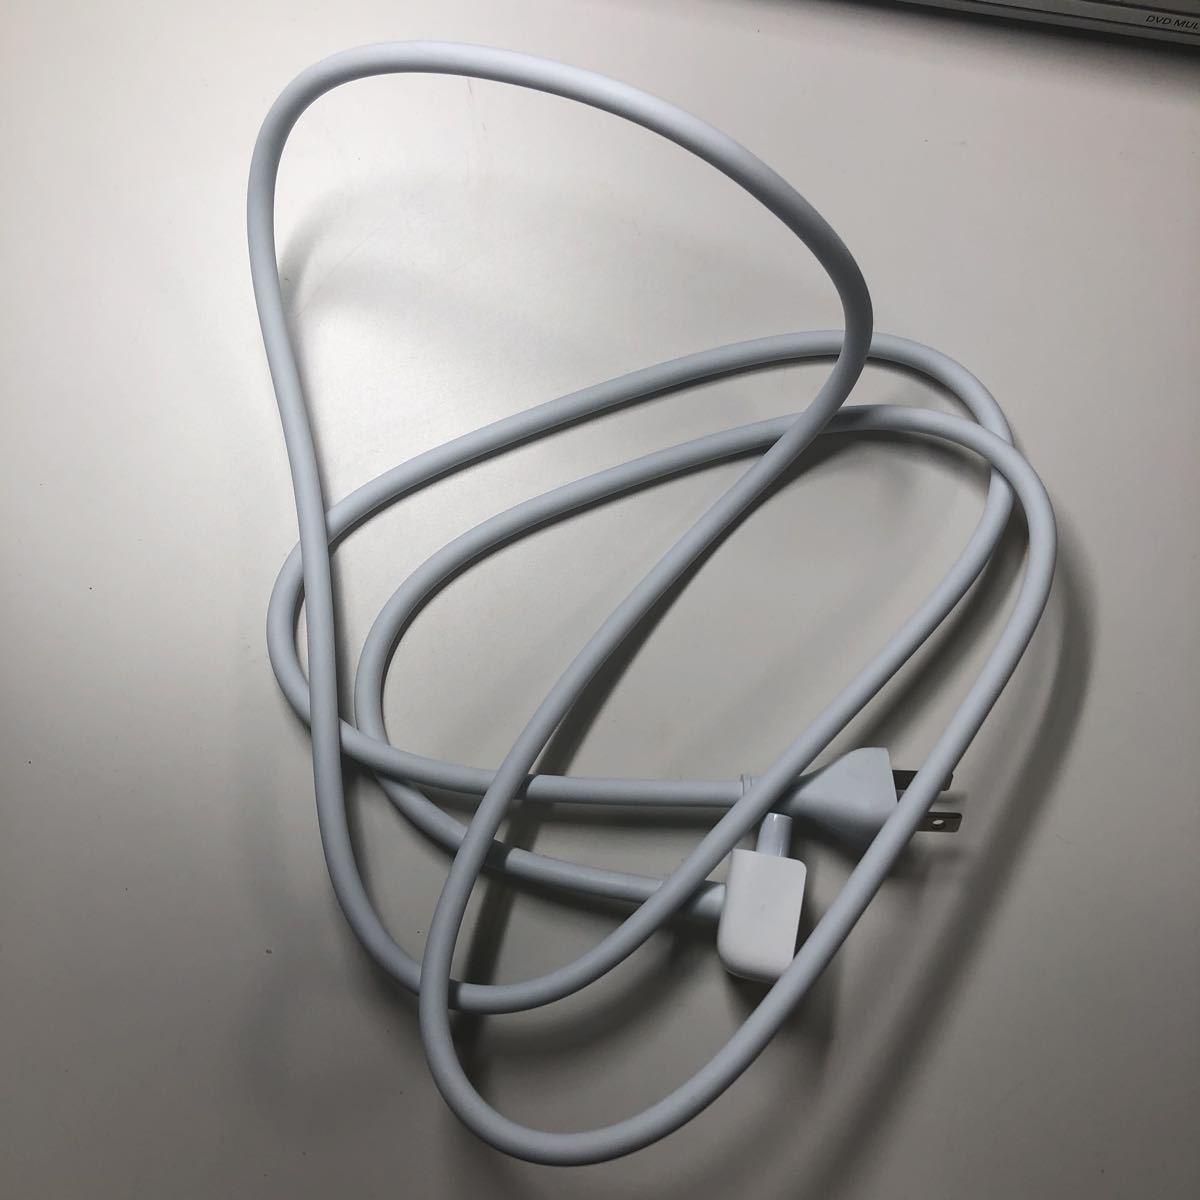 acアダプター 延長ケーブル Apple アップル macbook iMac 新品近い 送料無料 動作確認済み